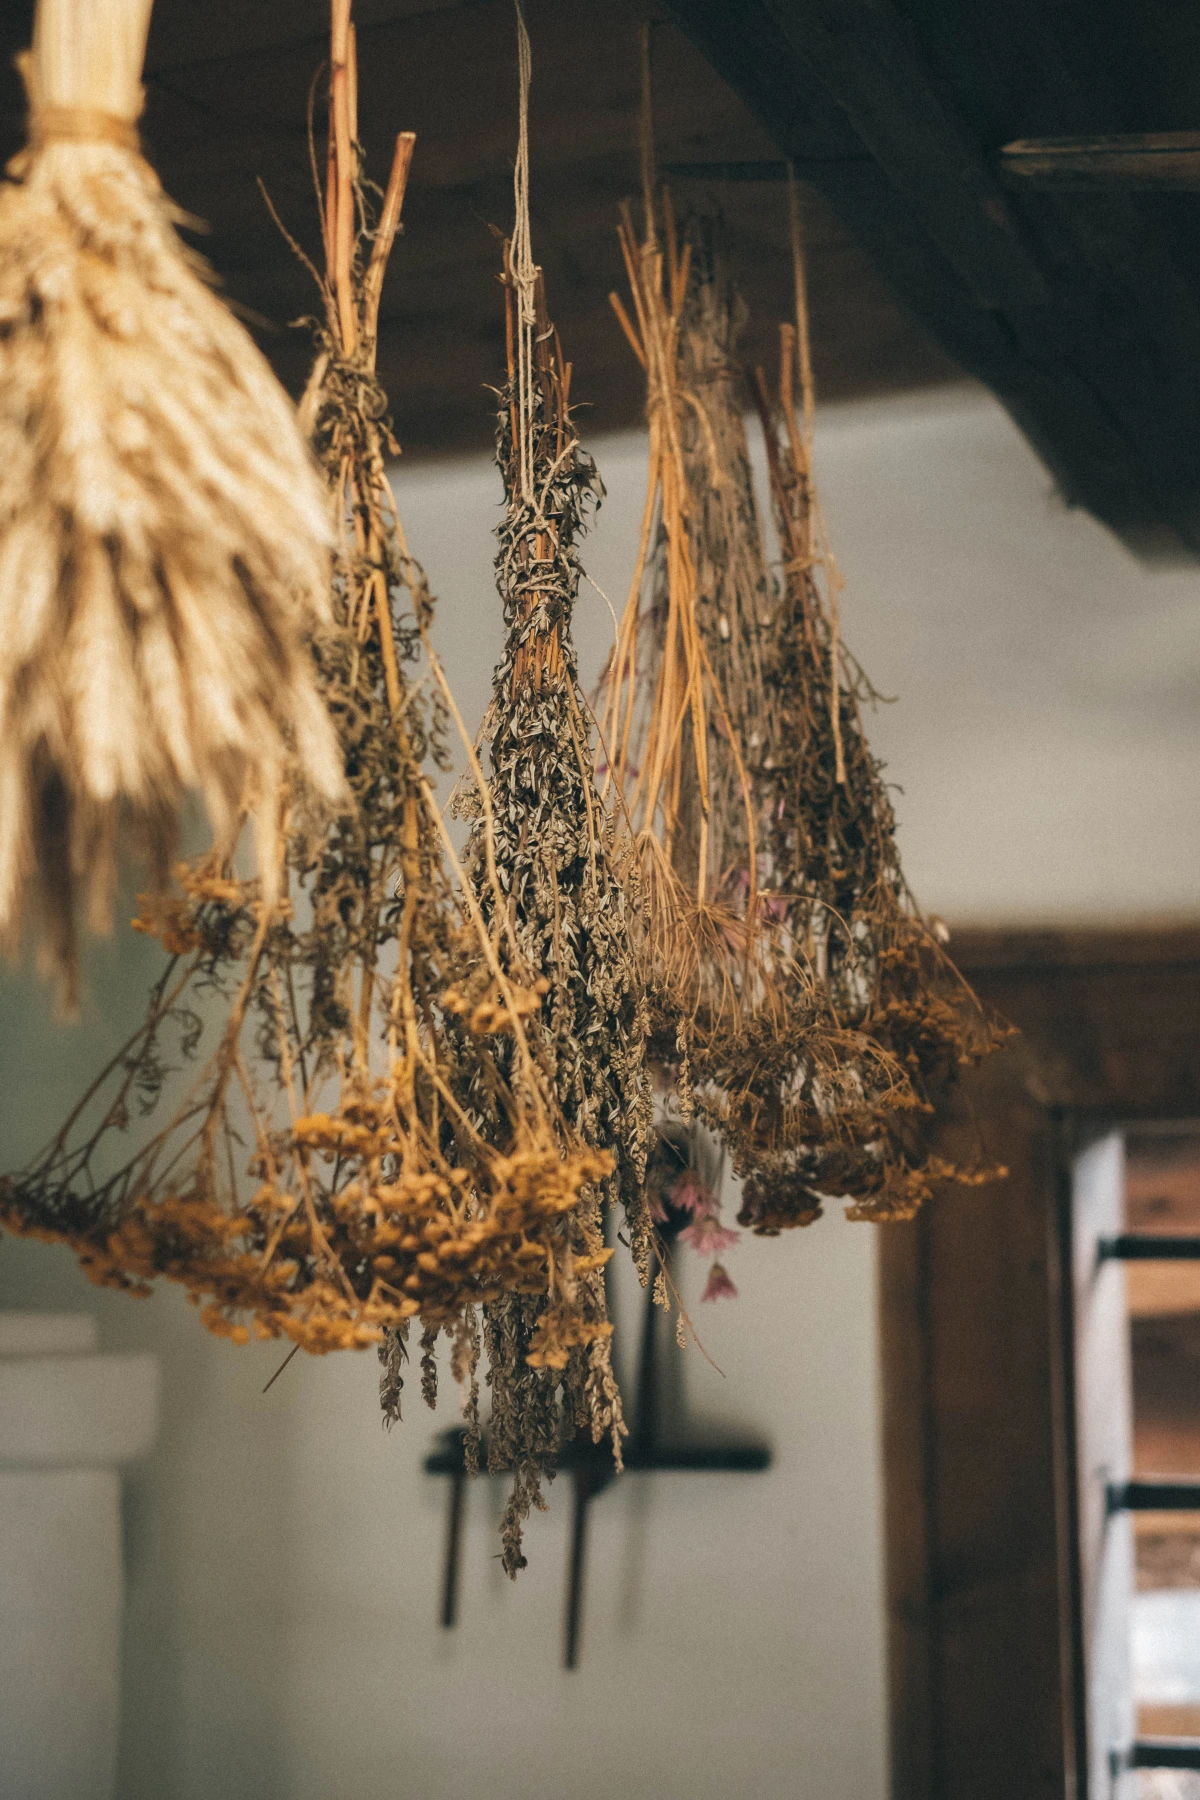 drying herbs upside down